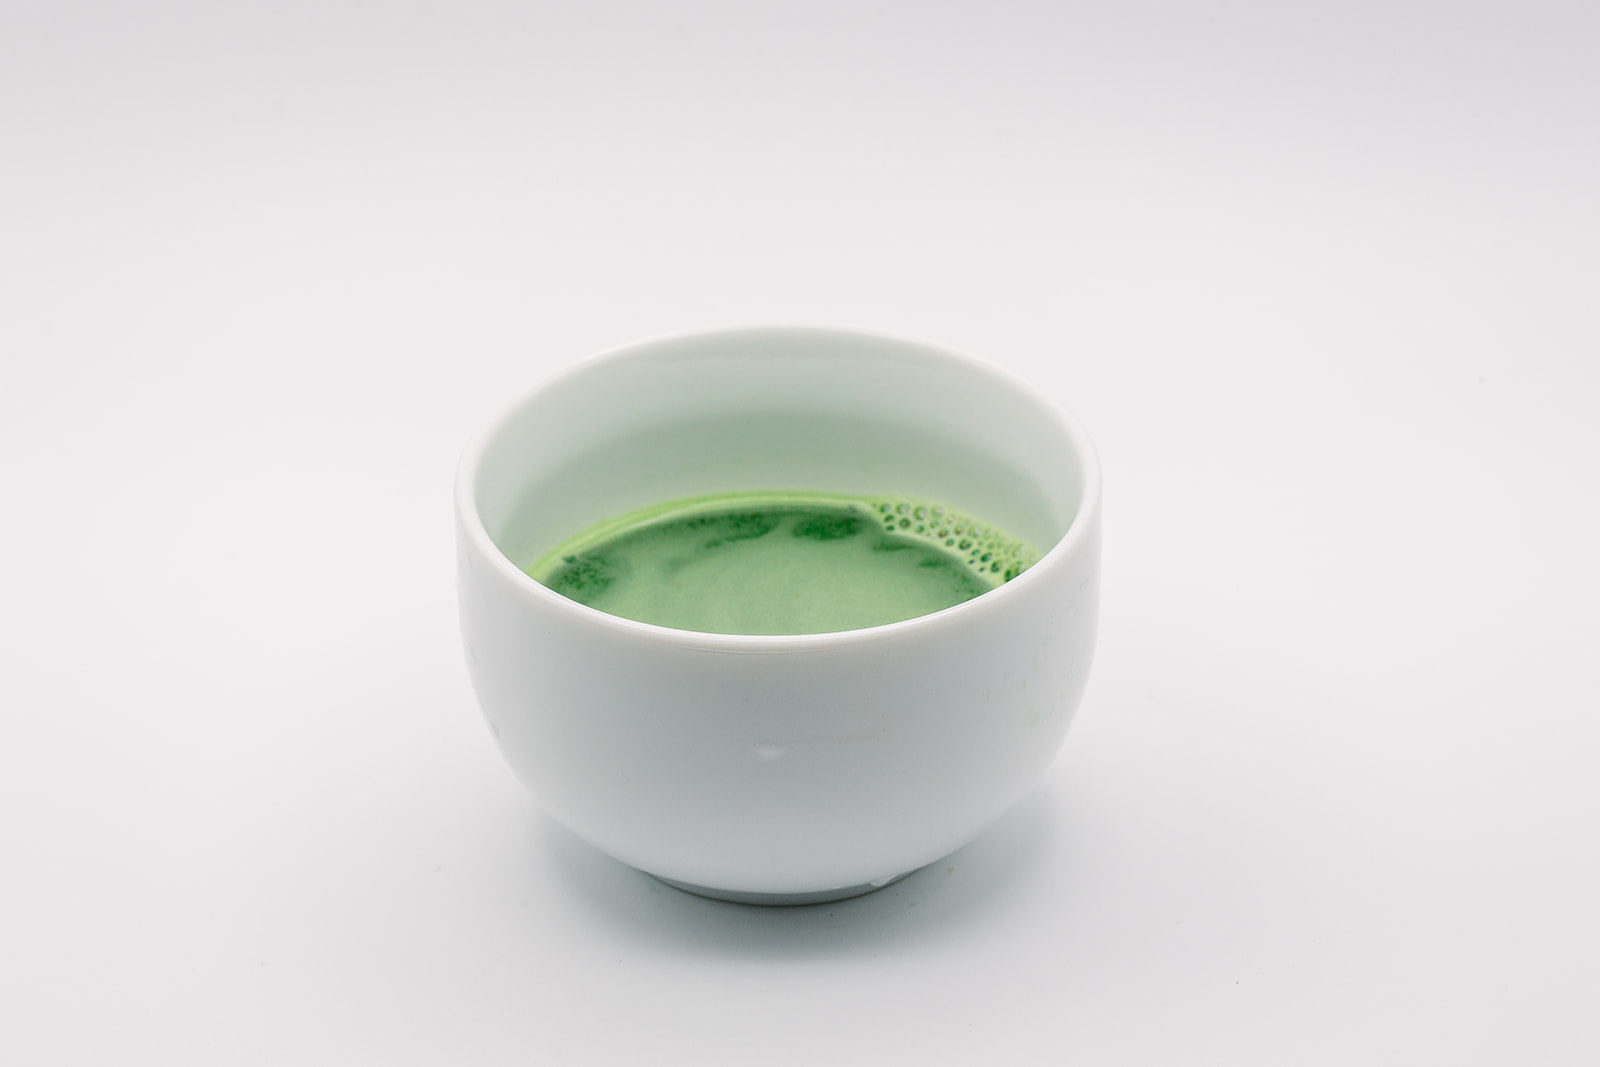 Ceremonial Matcha Green Tea by Aiya